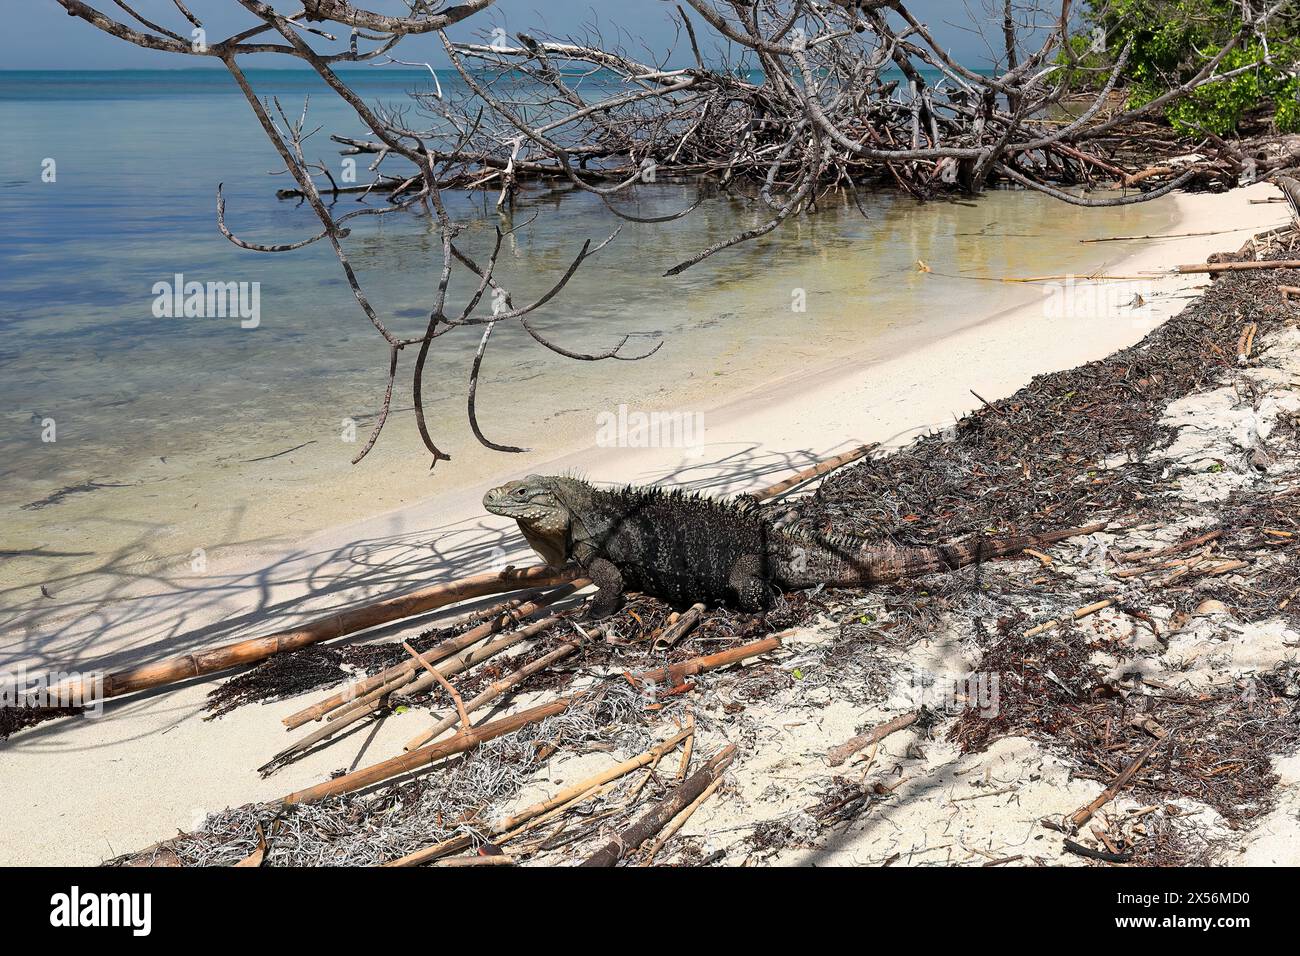 259 iguana cubana maschio crogiolandosi al sole sui detriti lasciati dall'alta marea in una piccola spiaggia di Cayo Iguana o Machos de Afuera Key.Trinidad-Cuba. Foto Stock